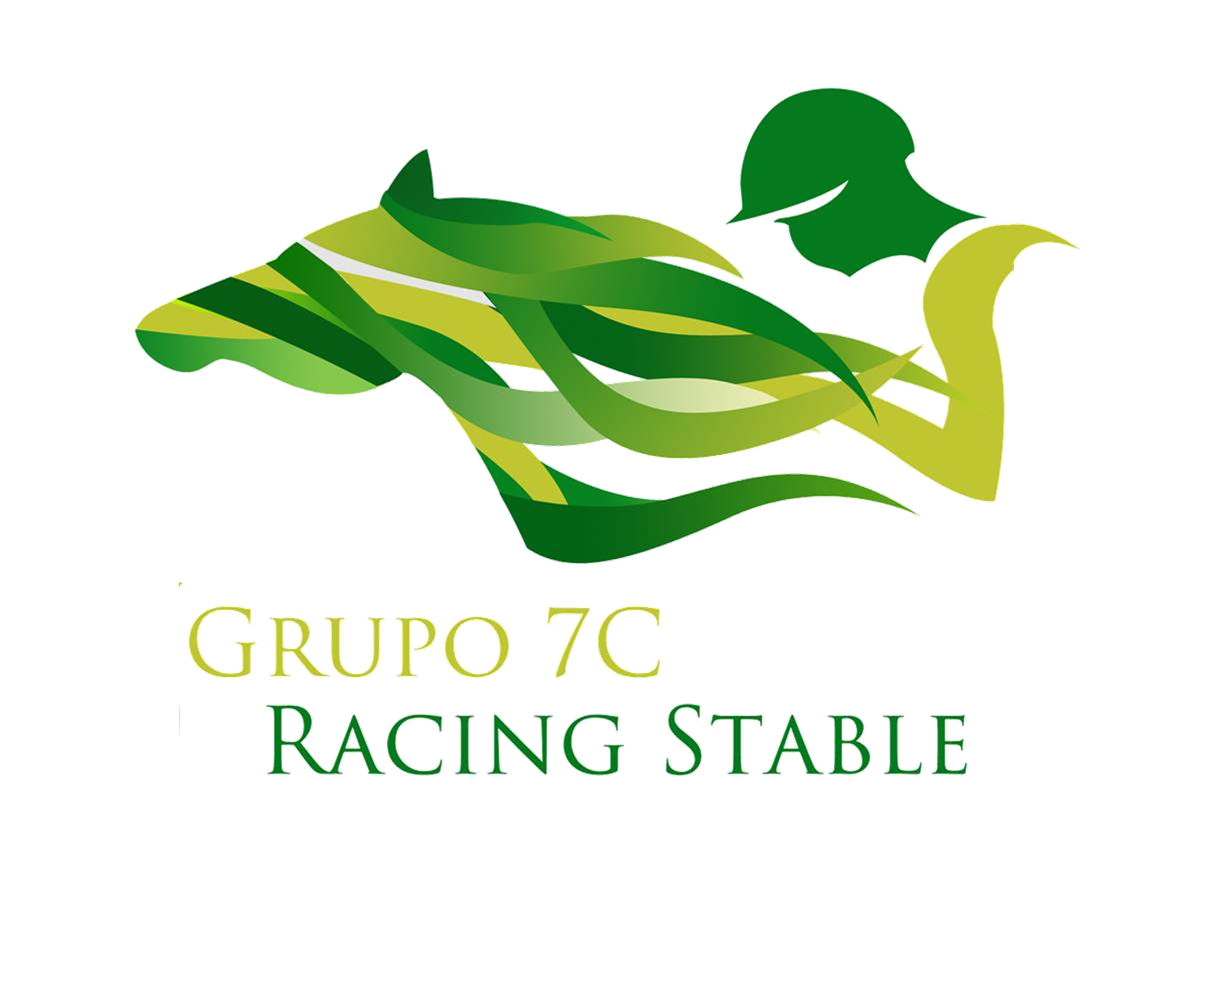 GRUPO 7C RACING STABLES